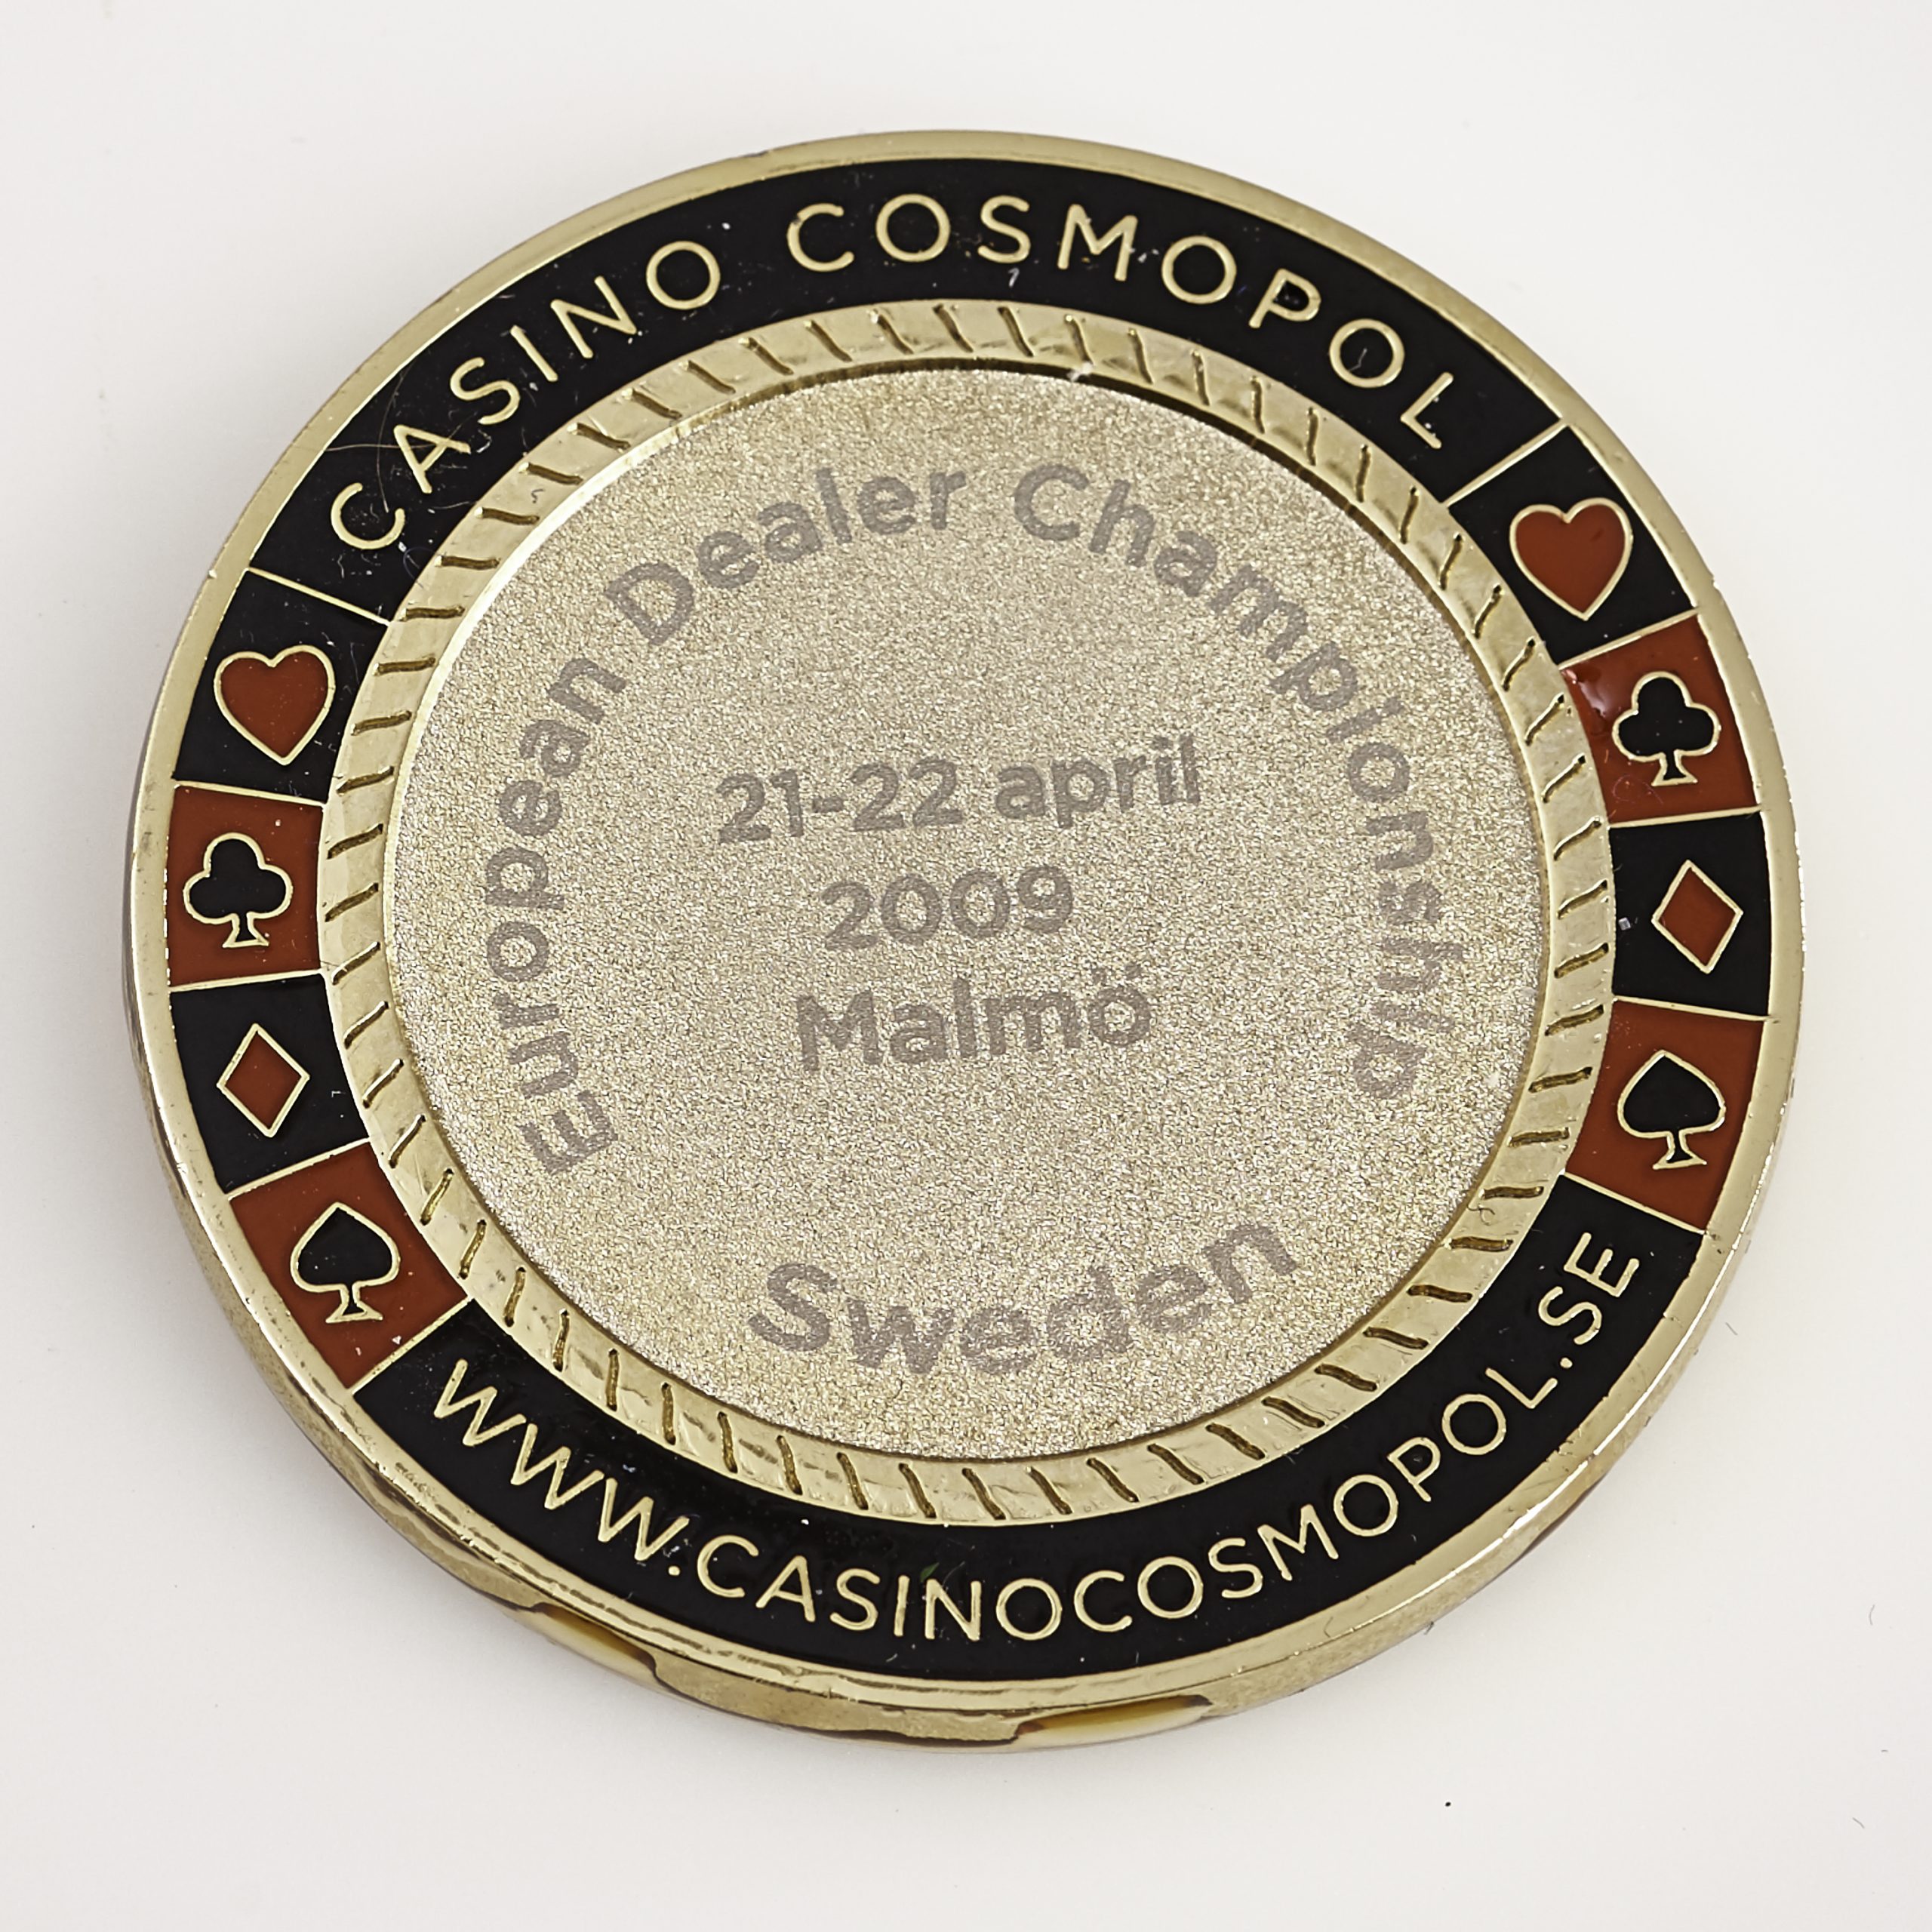 CASINO COSMOPOL, EUROPEAN DEALER CHAMPIONSHIP, Poker Card Guard